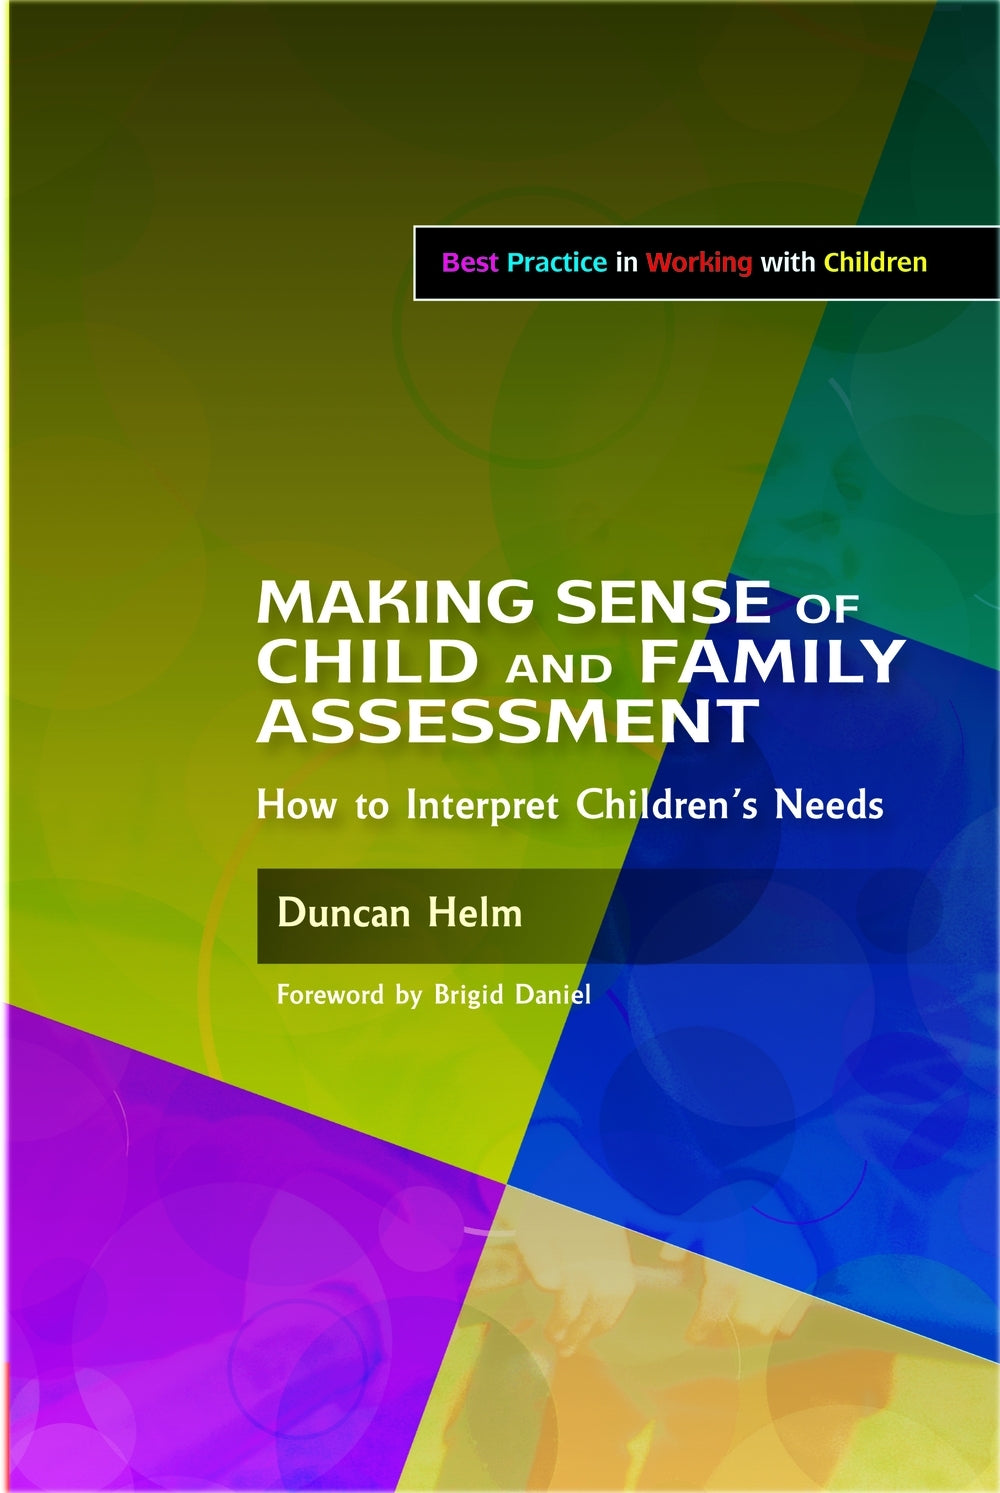 Making Sense of Child and Family Assessment by Brigid Daniel, Duncan Helm